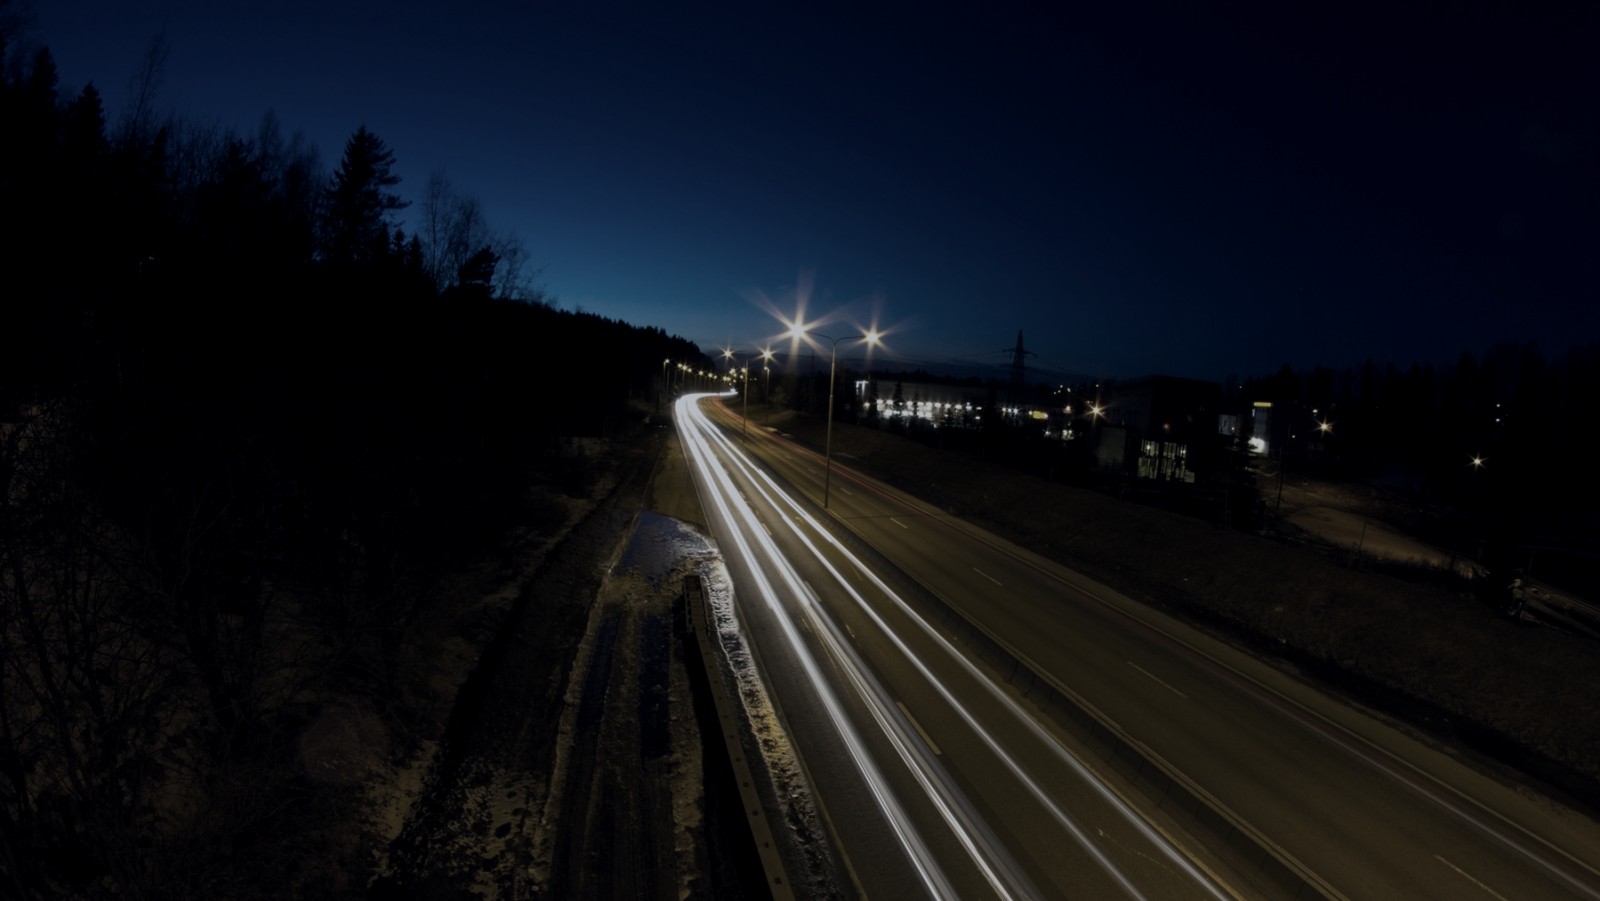 Lights trails along a darken road